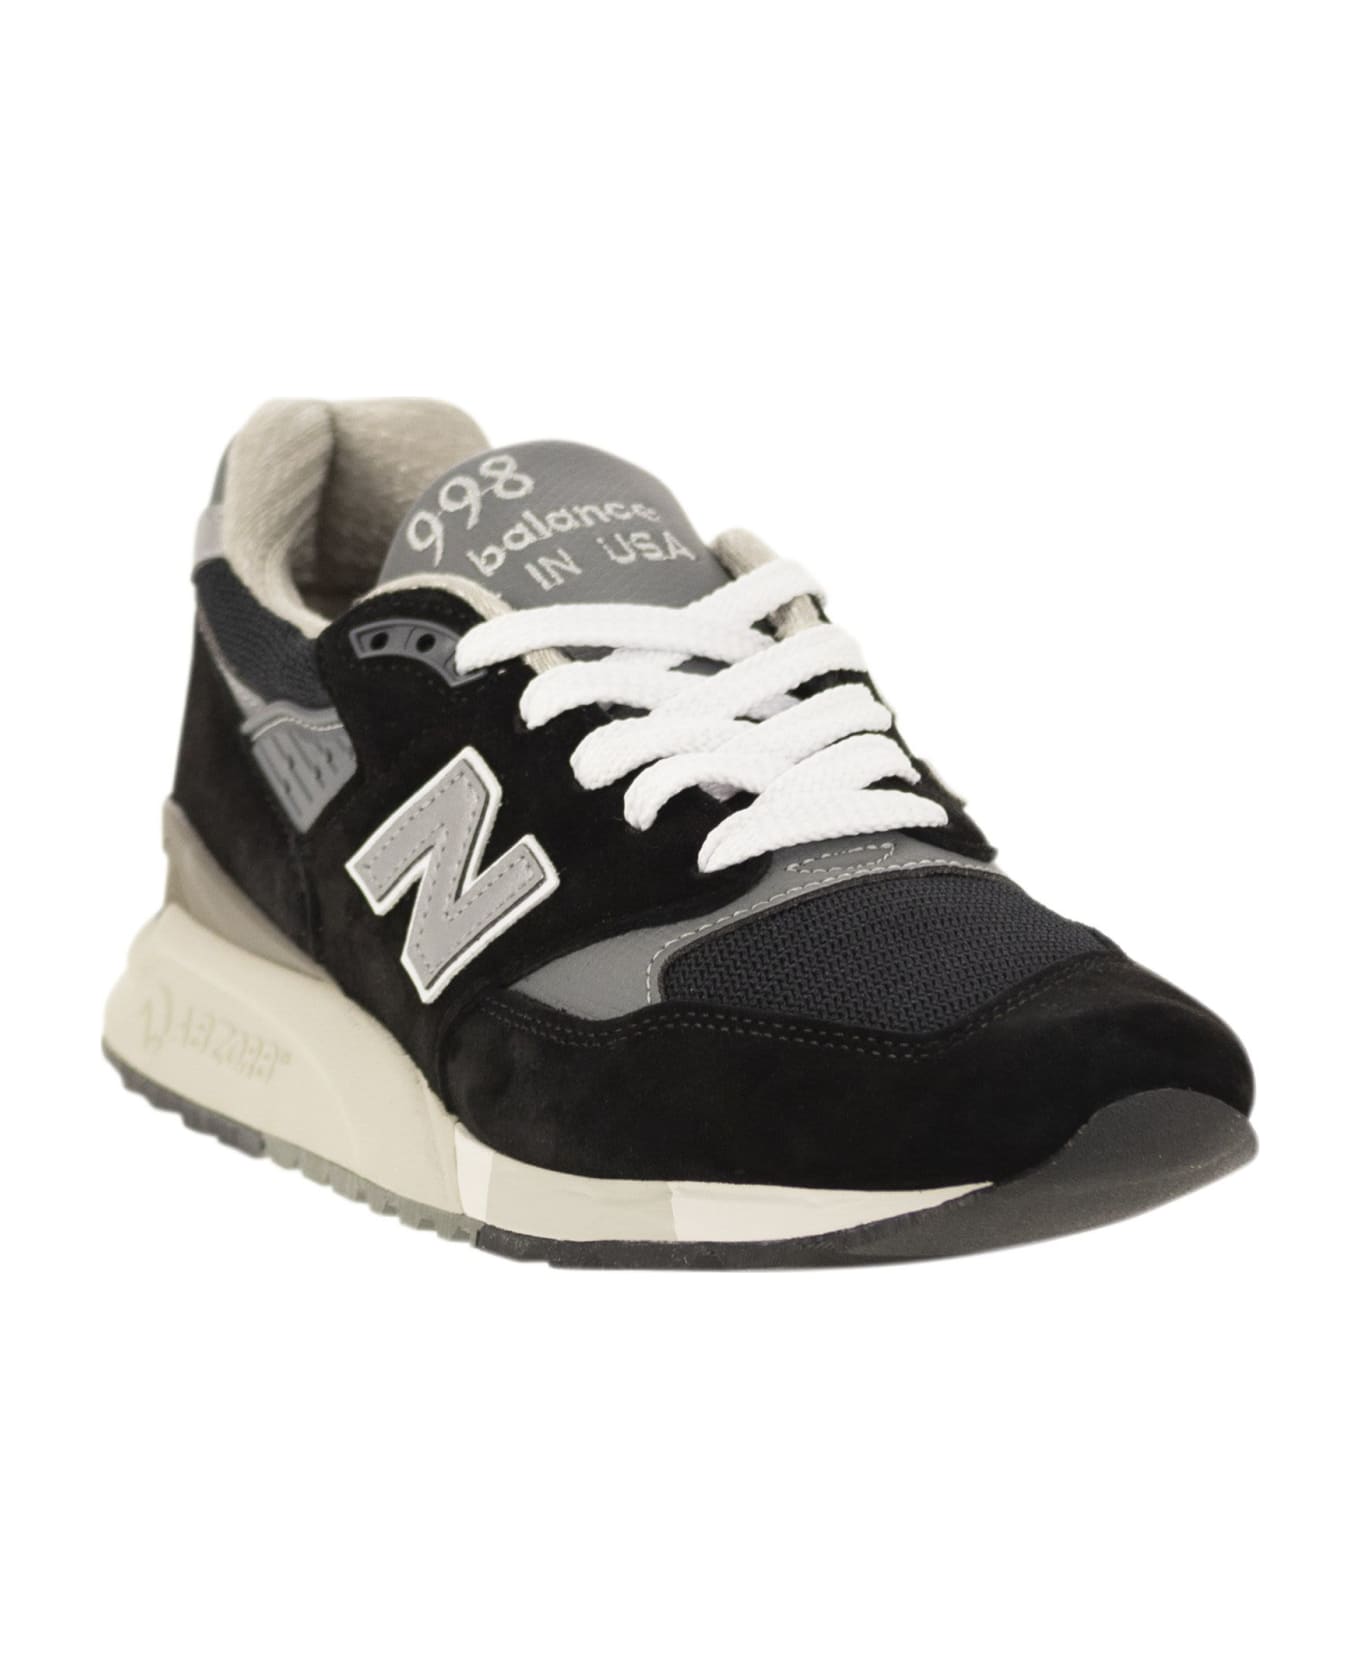 New Balance 998 - Sneakers - Black